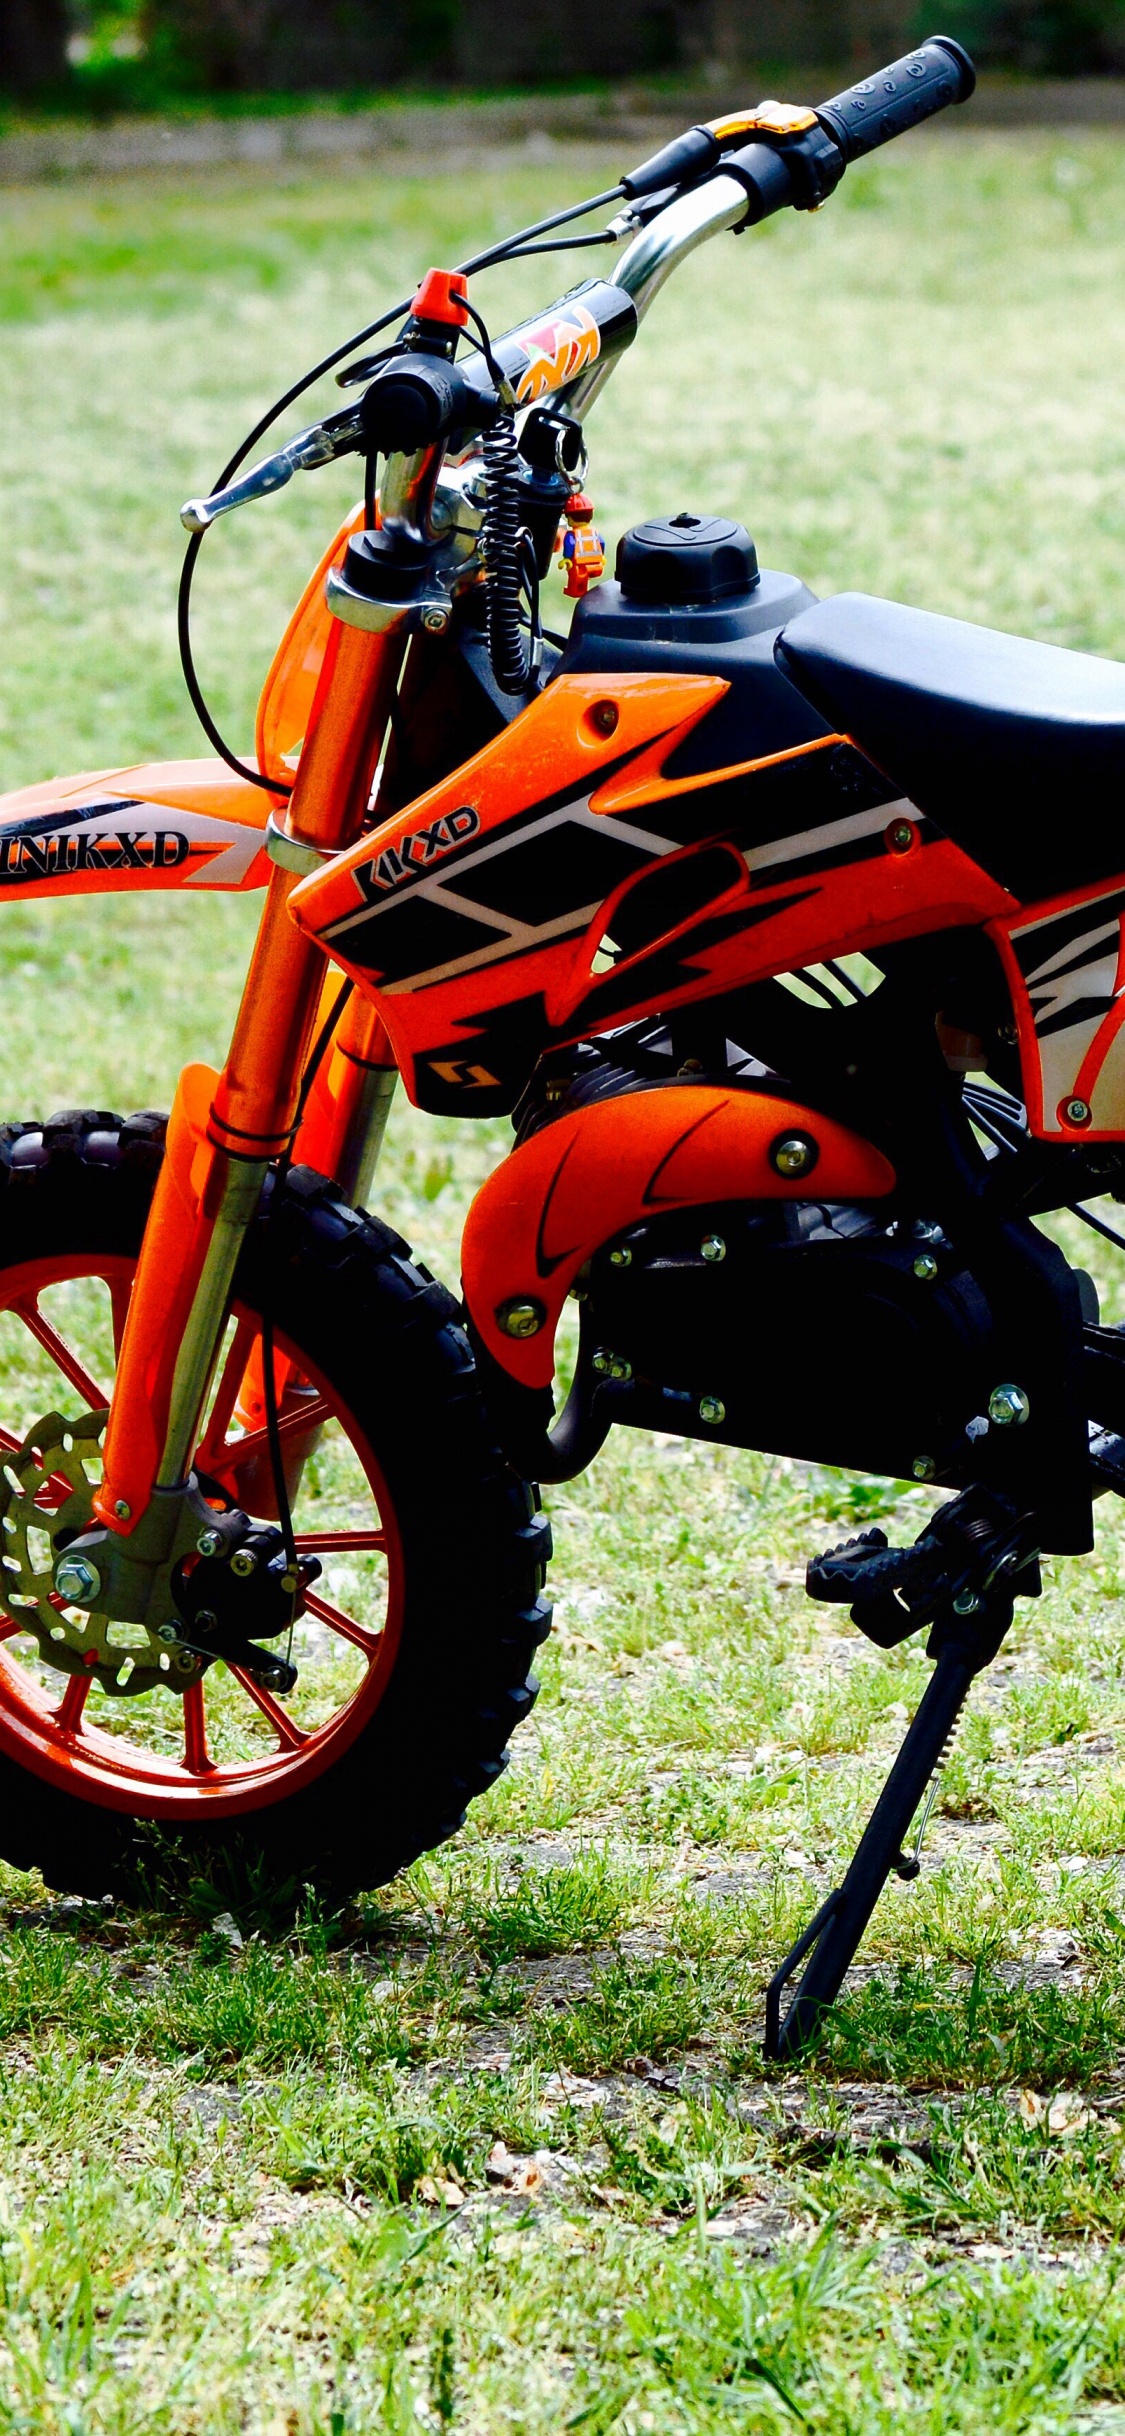 Orange and Black Sports Bike on Green Grass Field During Daytime. Wallpaper in 1125x2436 Resolution